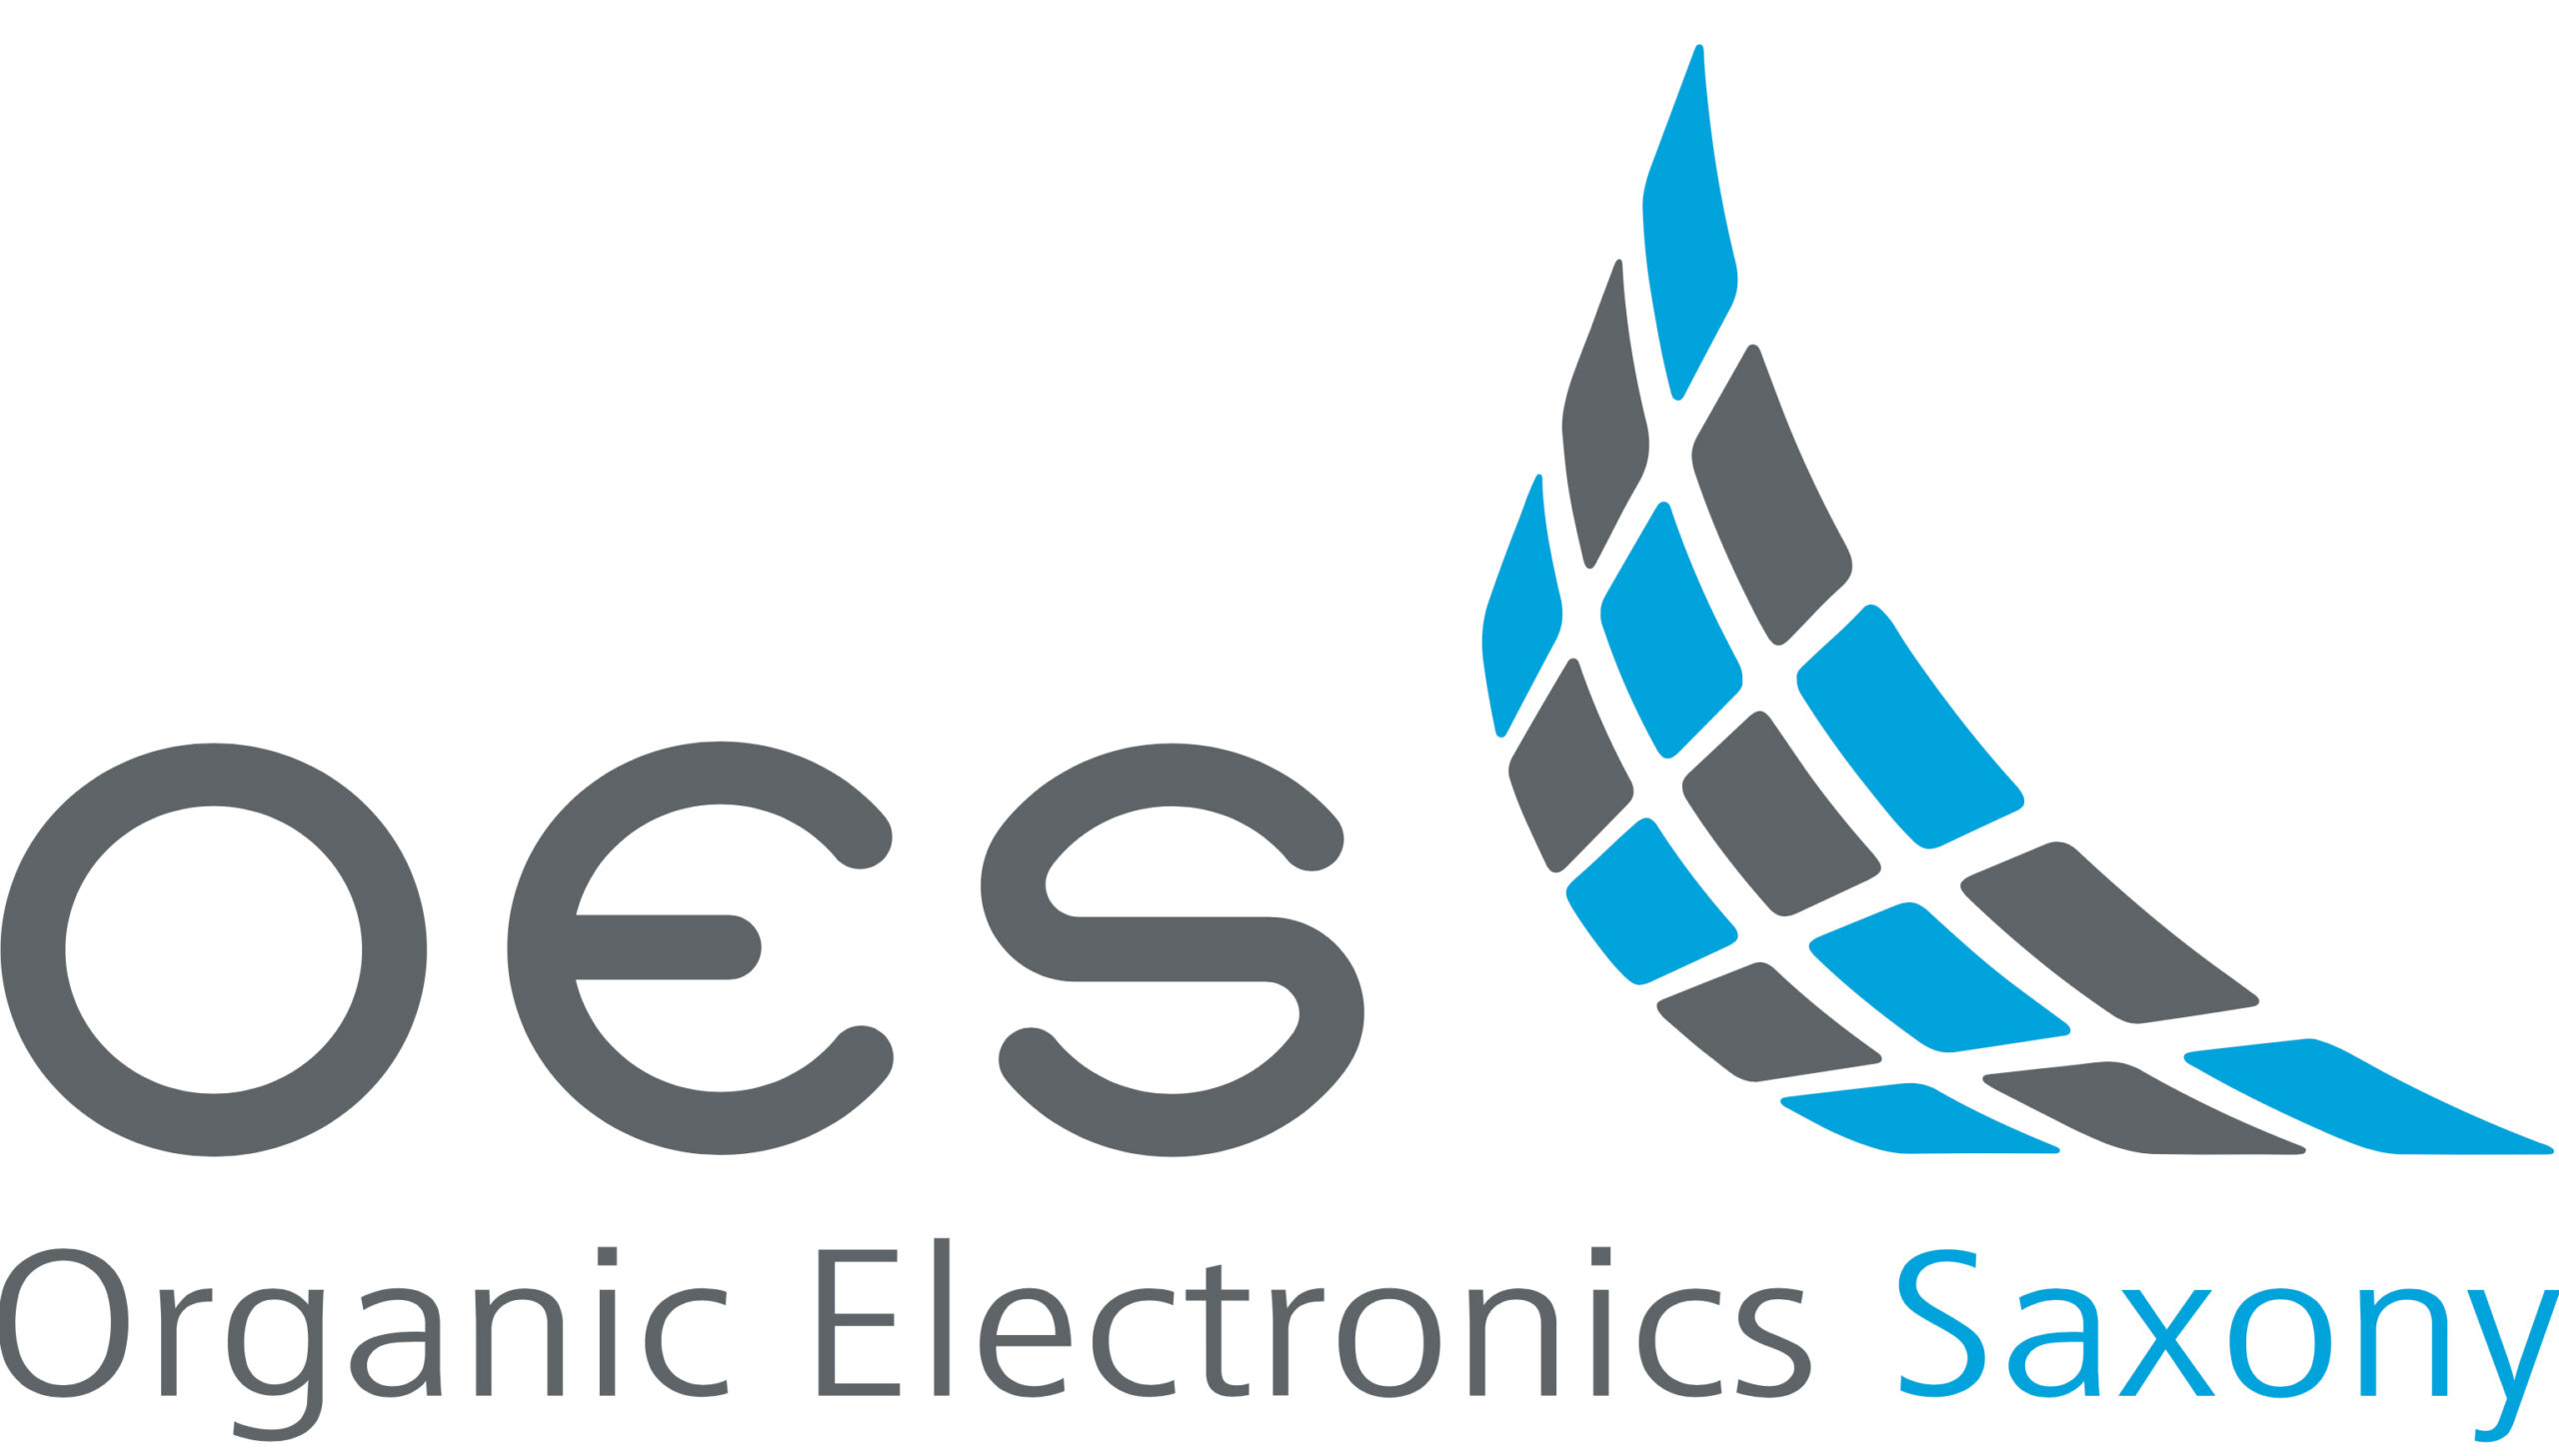 Organic Electronics Saxony (OES)